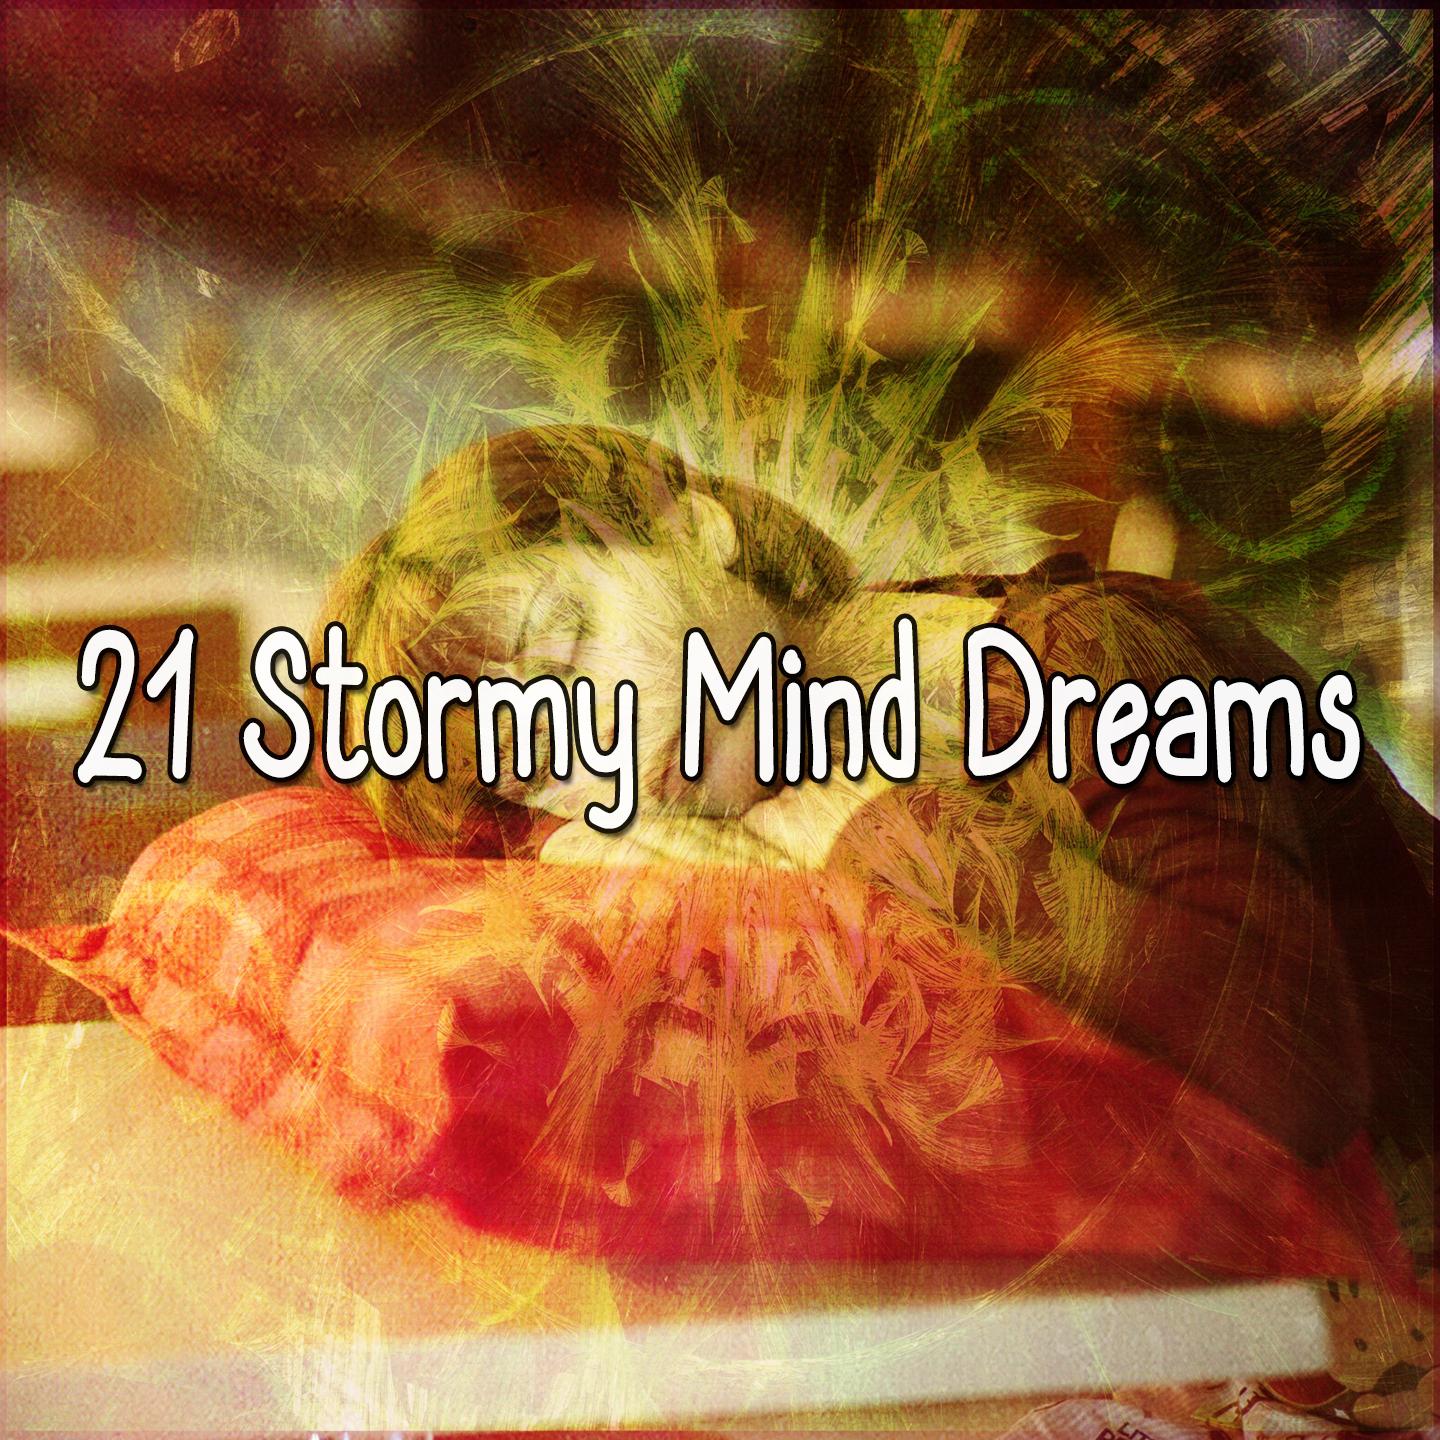 21 Stormy Mind Dreams